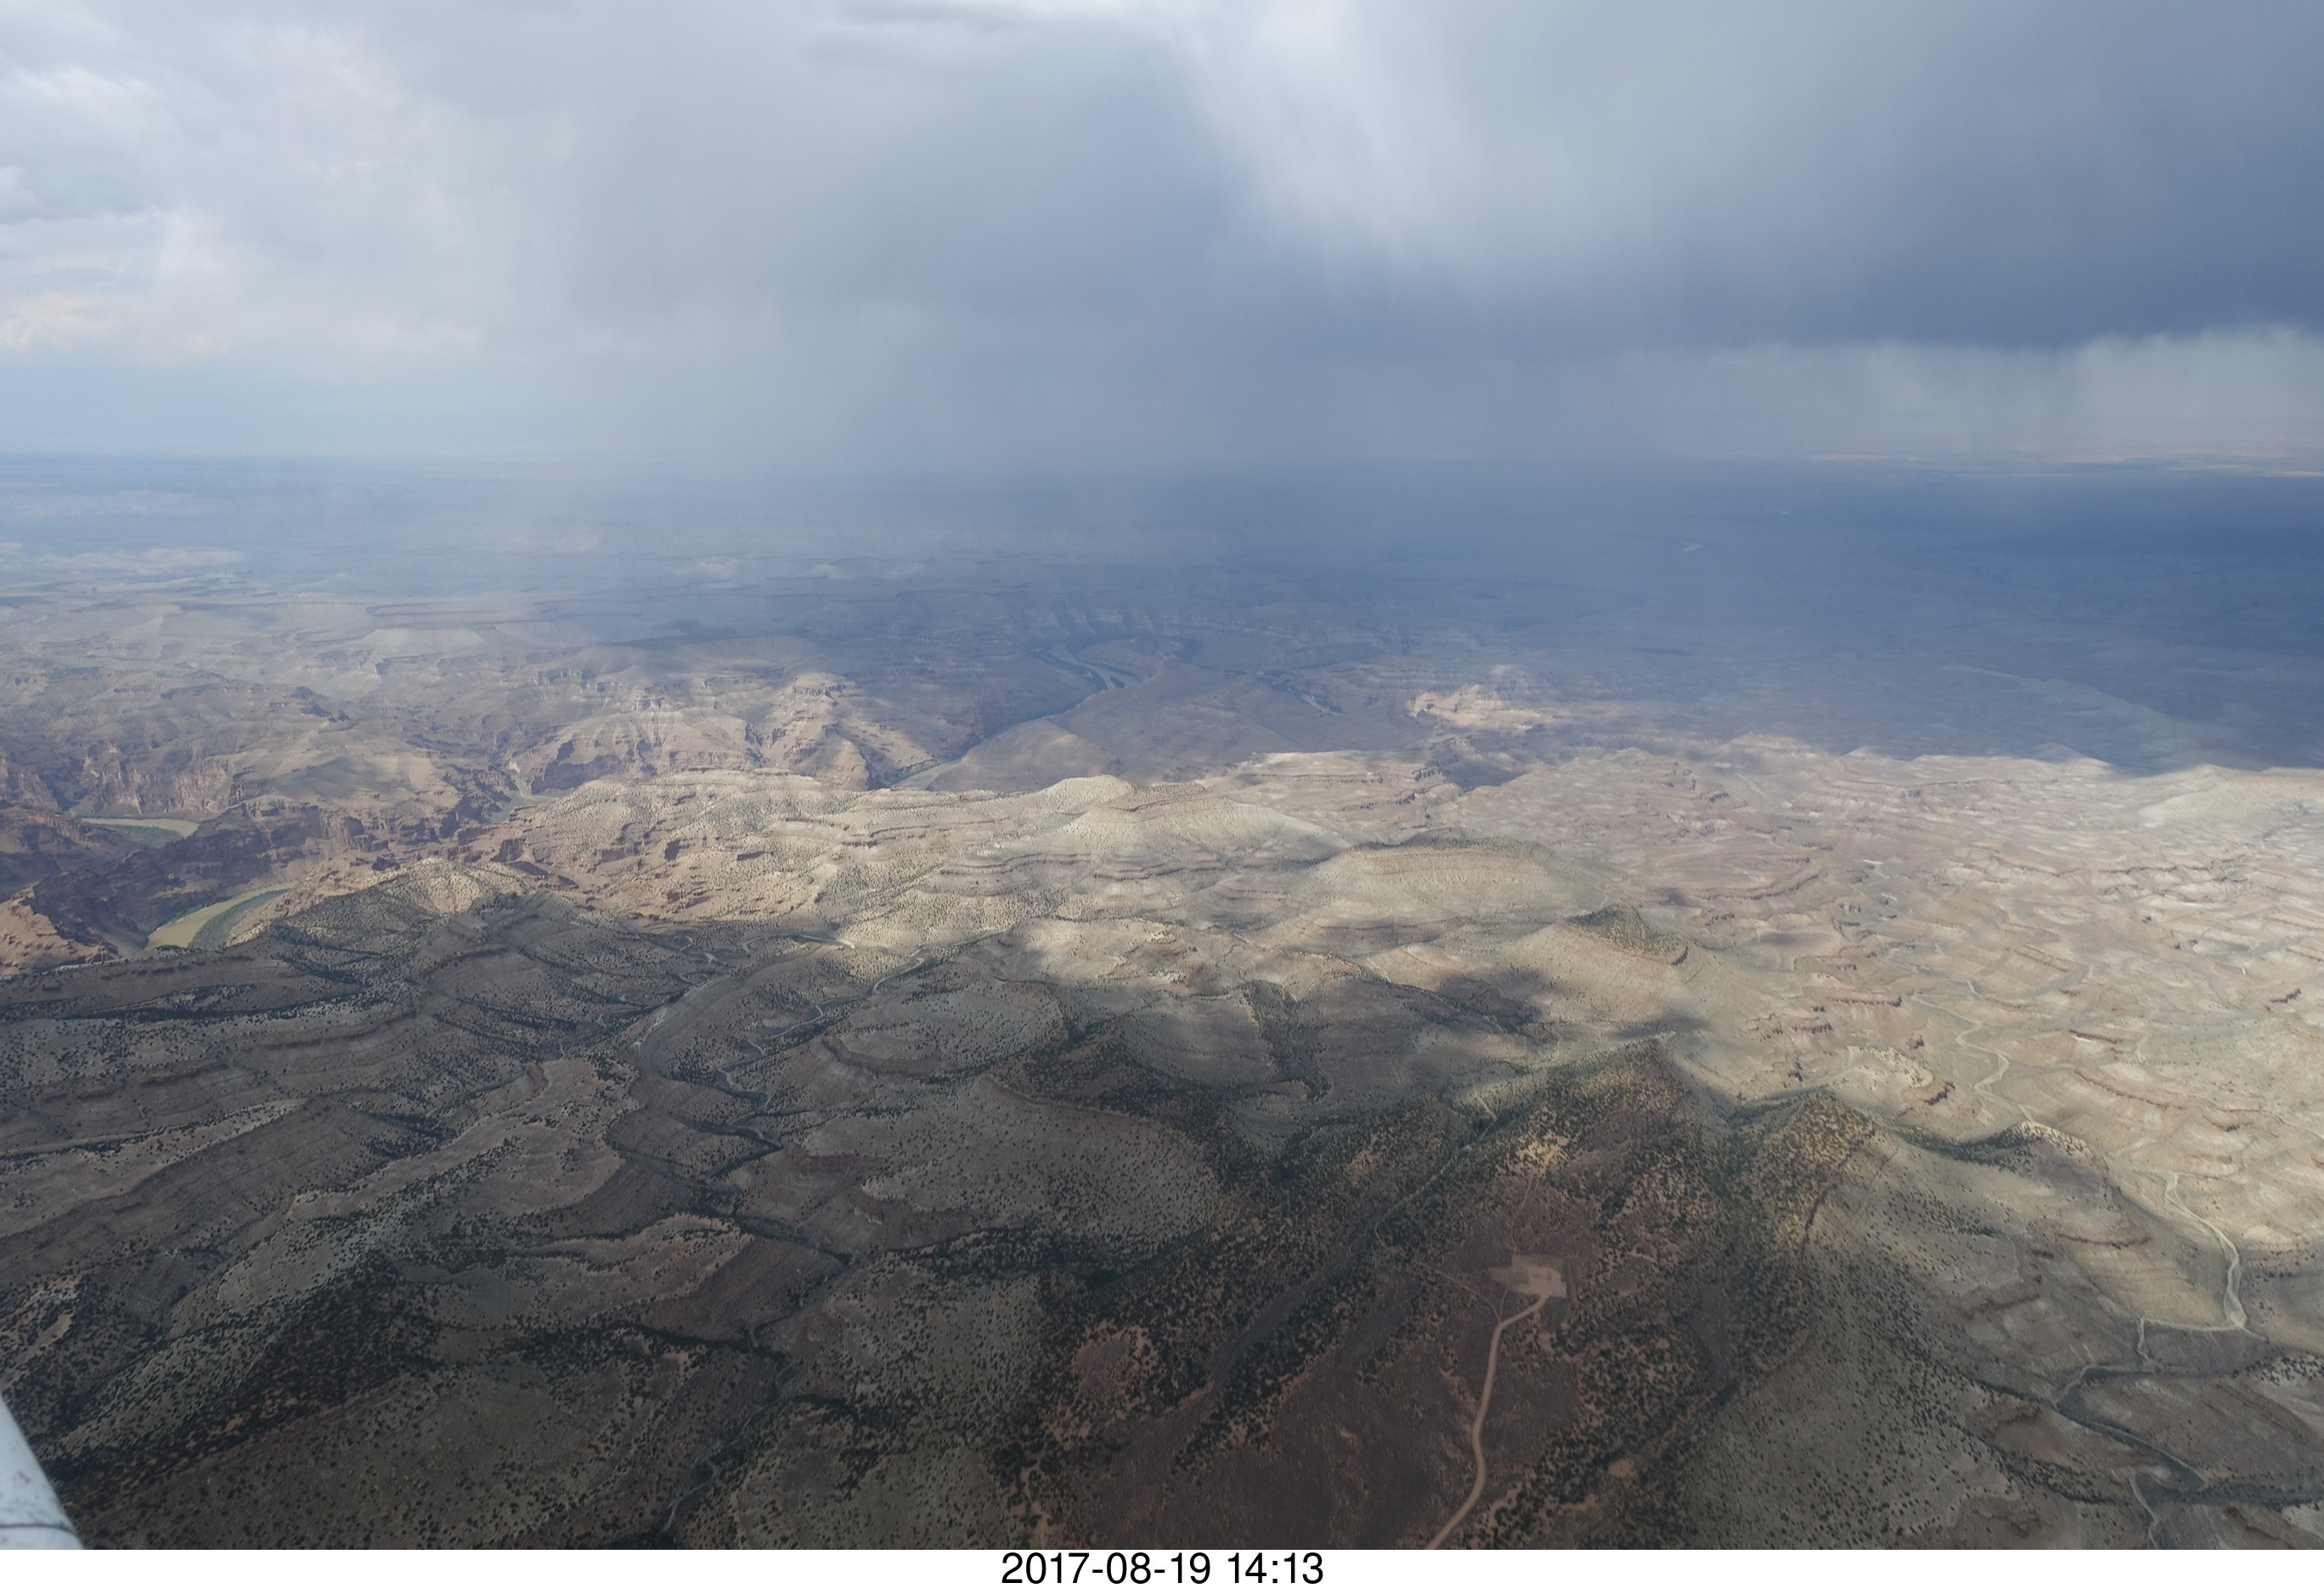 aerial - Book Cliffs - Desolation Canyon - clouds and rain